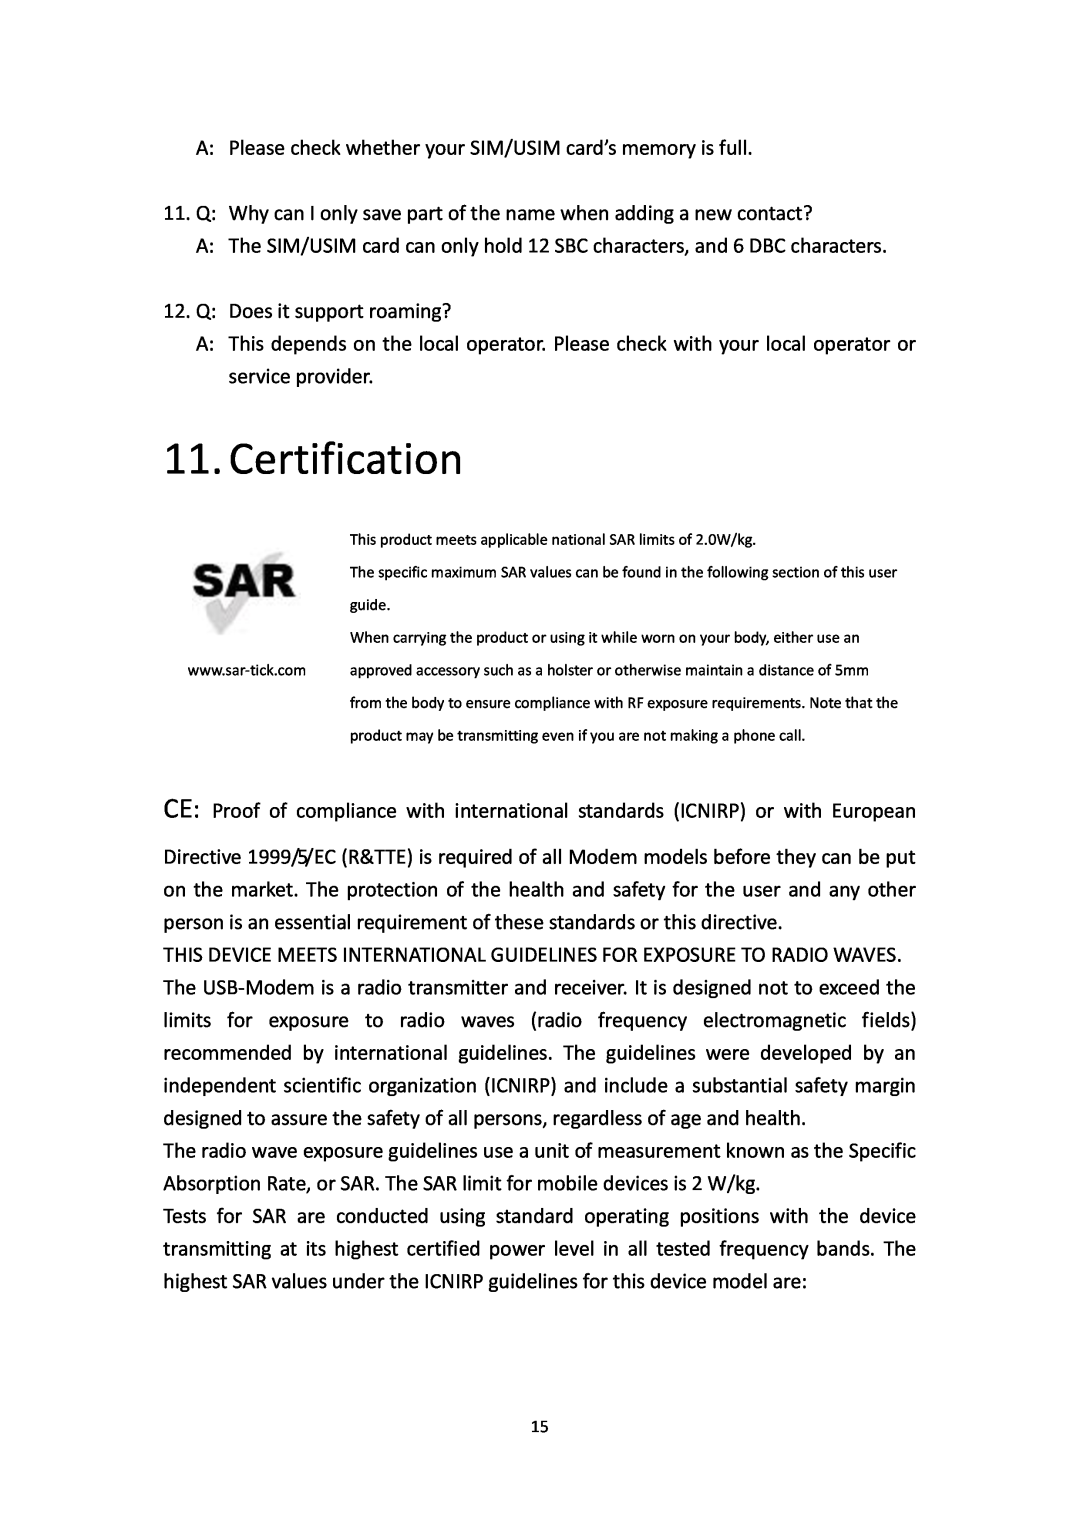 Alcatel X602, X232 manual Certification 